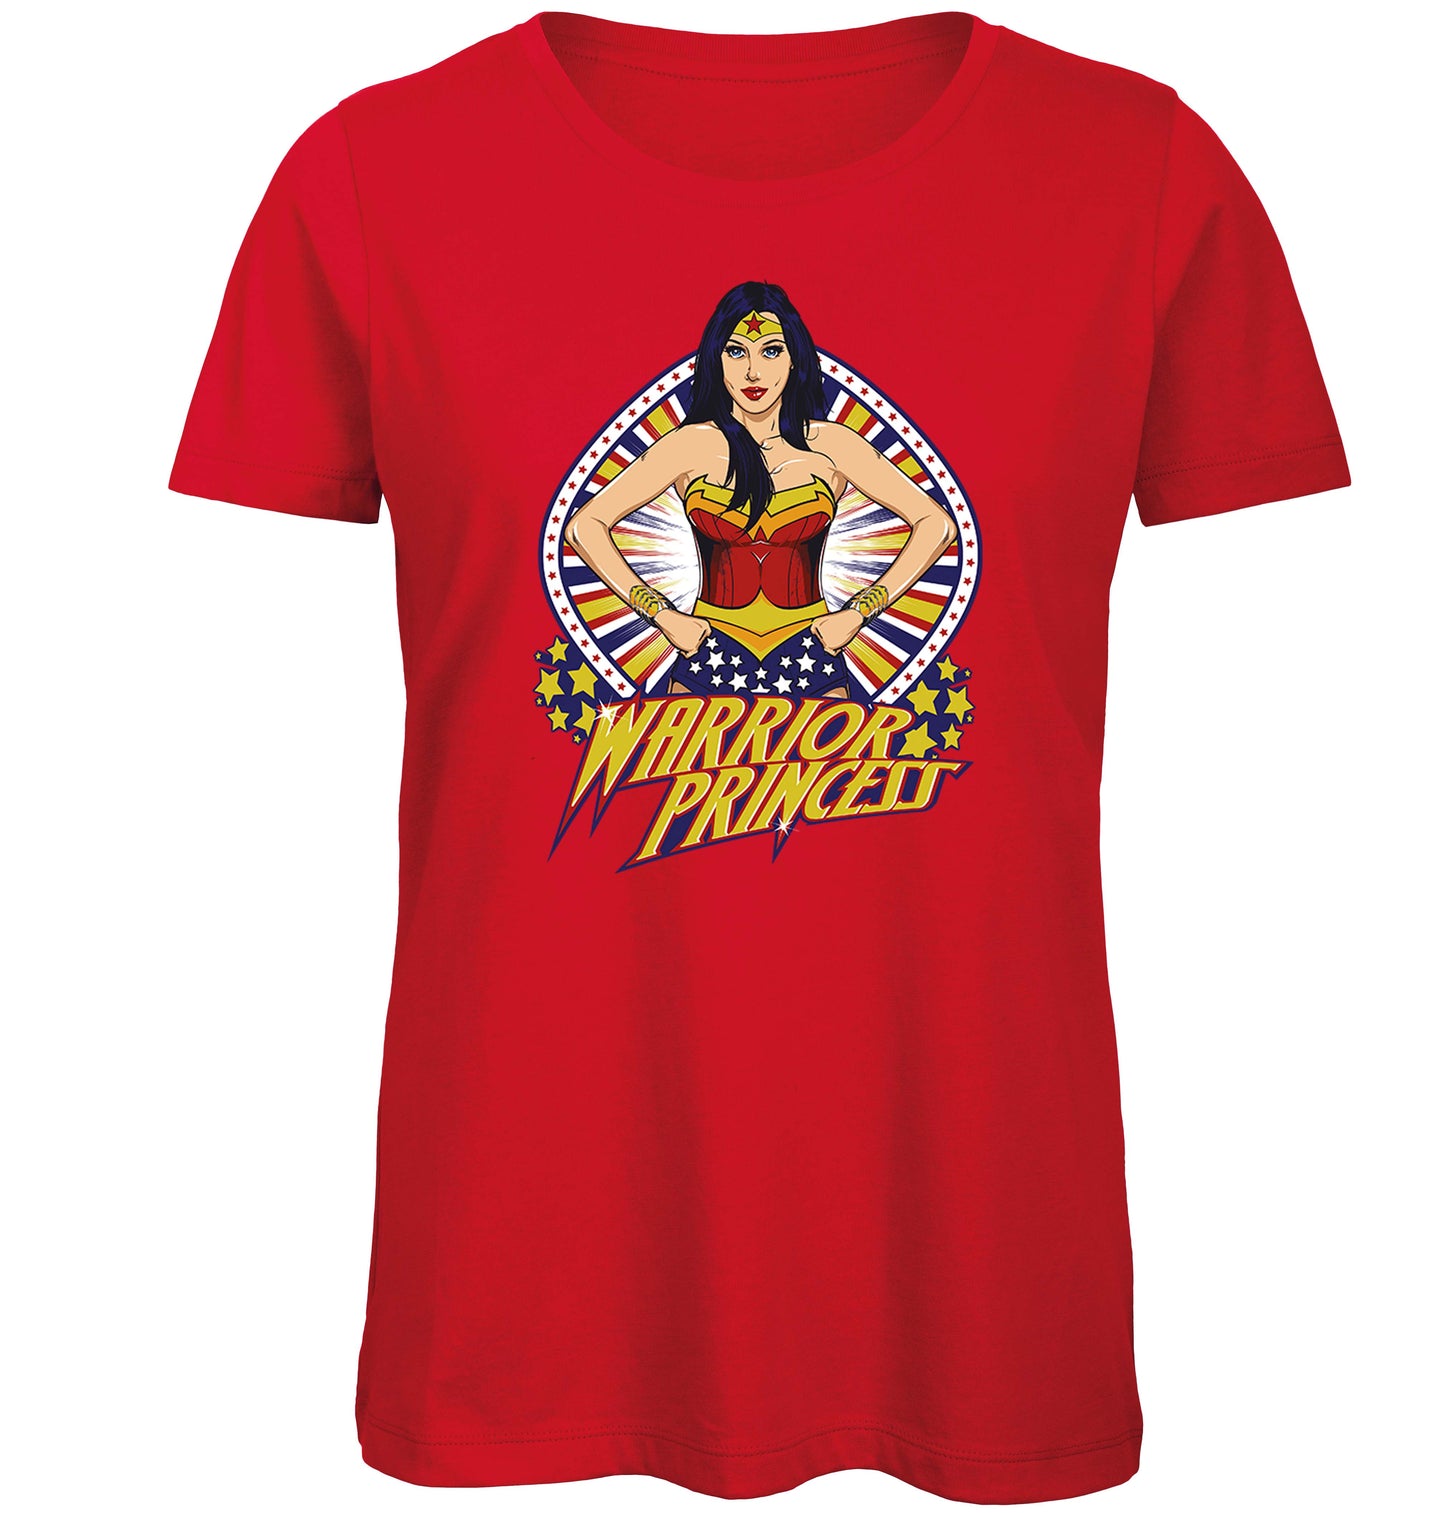 Warrior Princess T-Shirt - Scattee